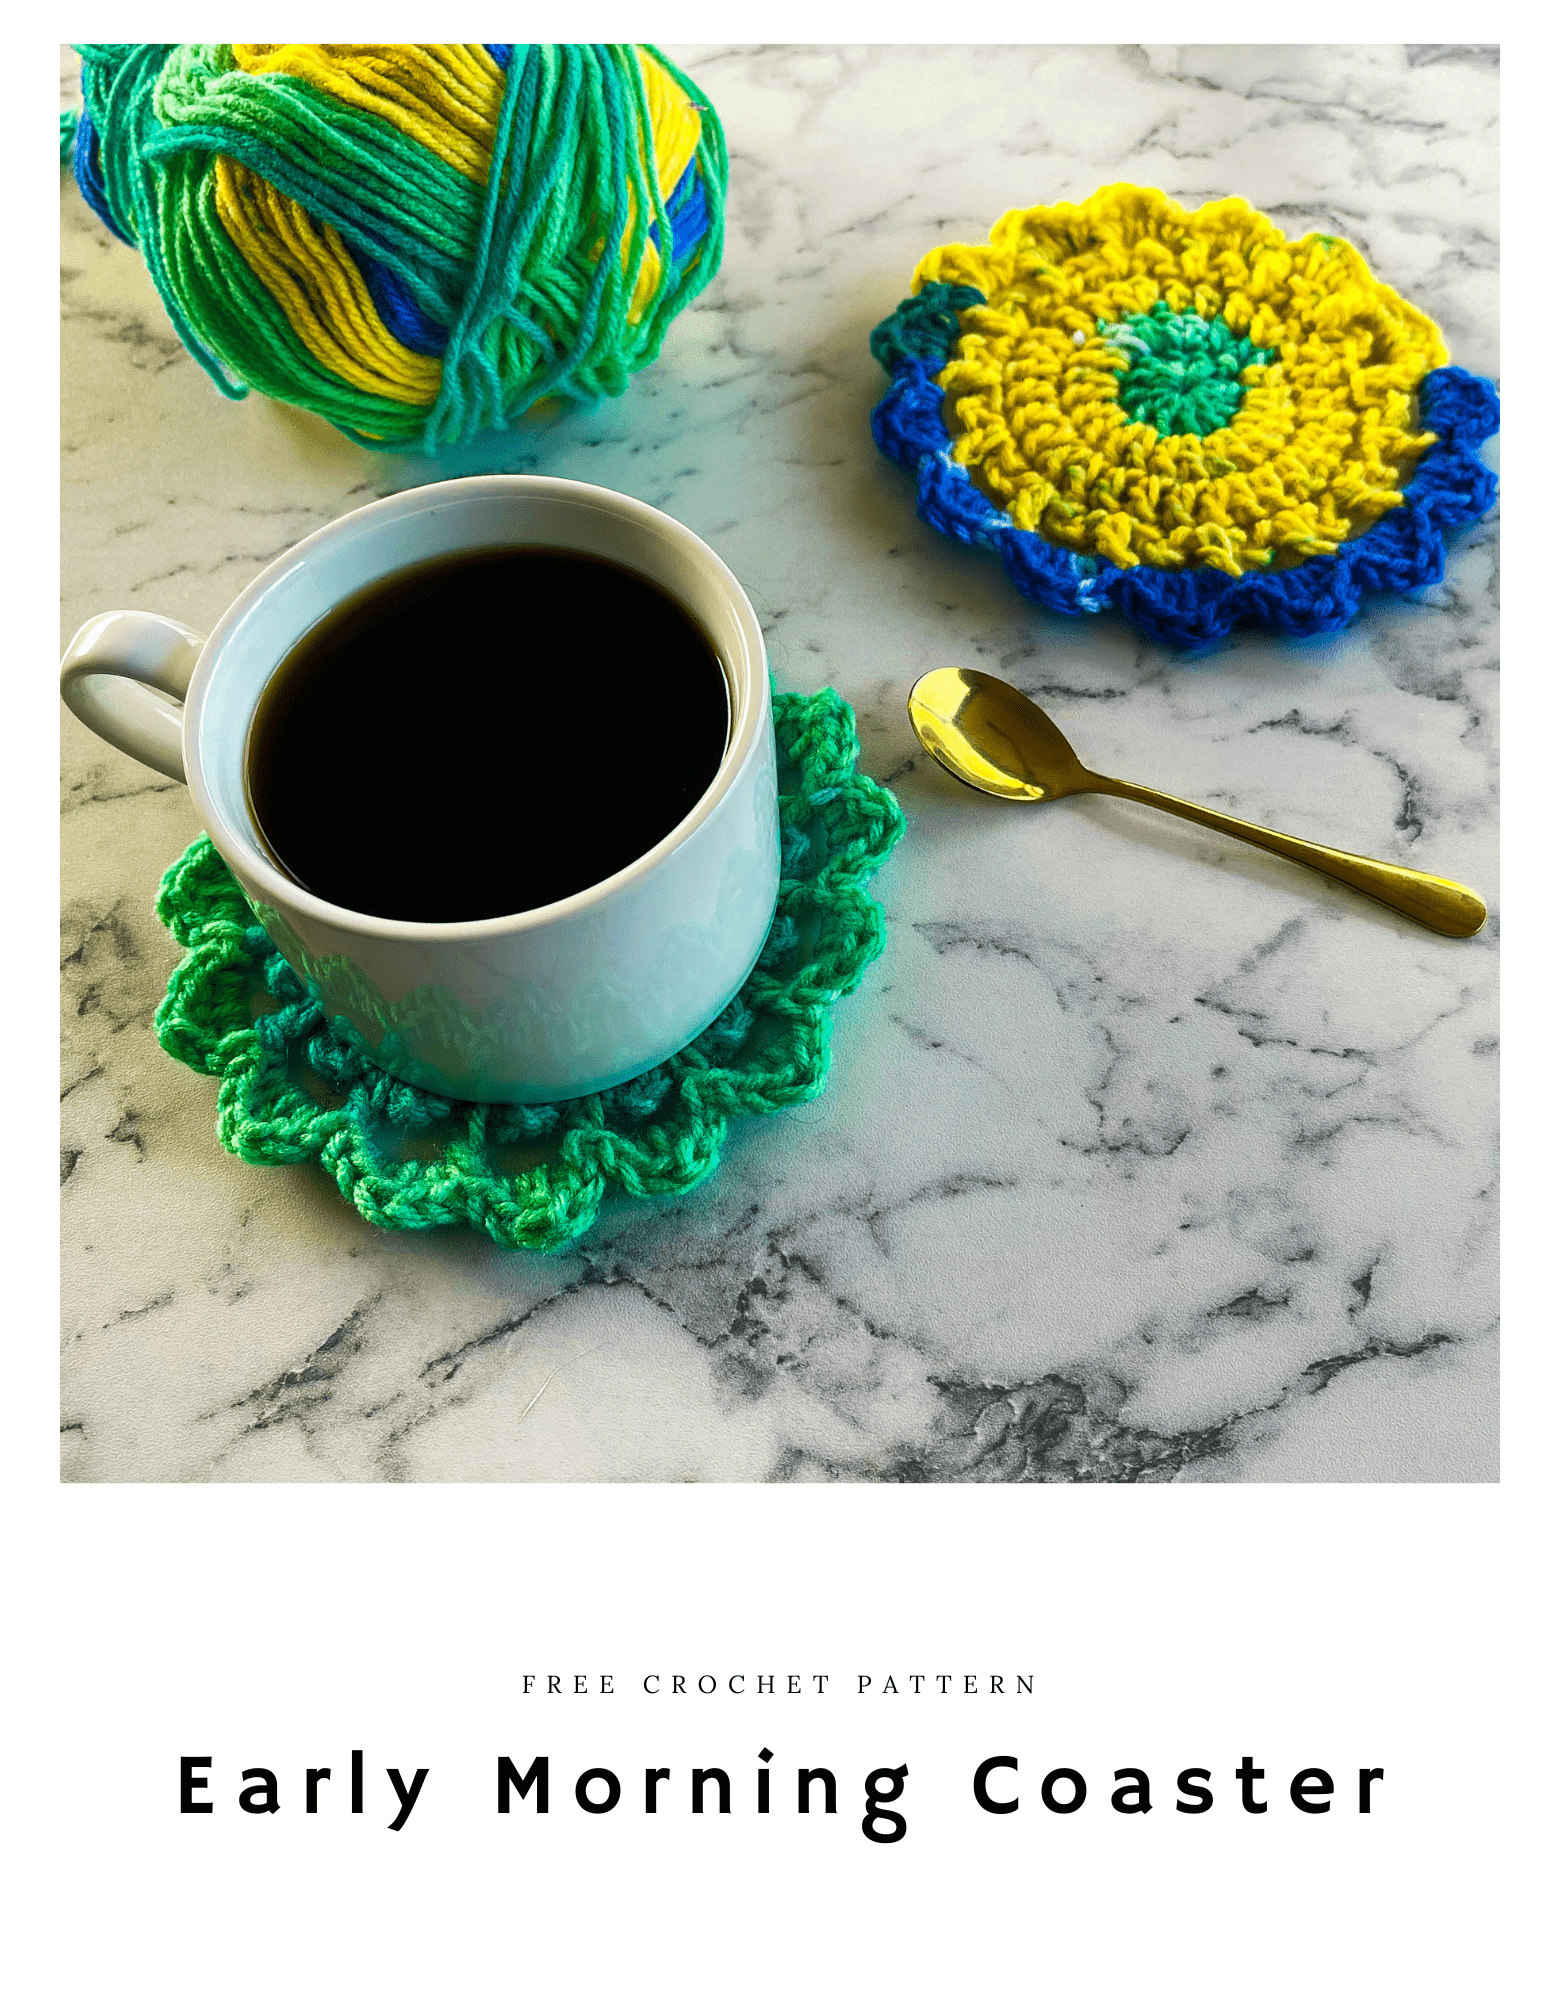 Early Morning Crochet Coasters Pattern